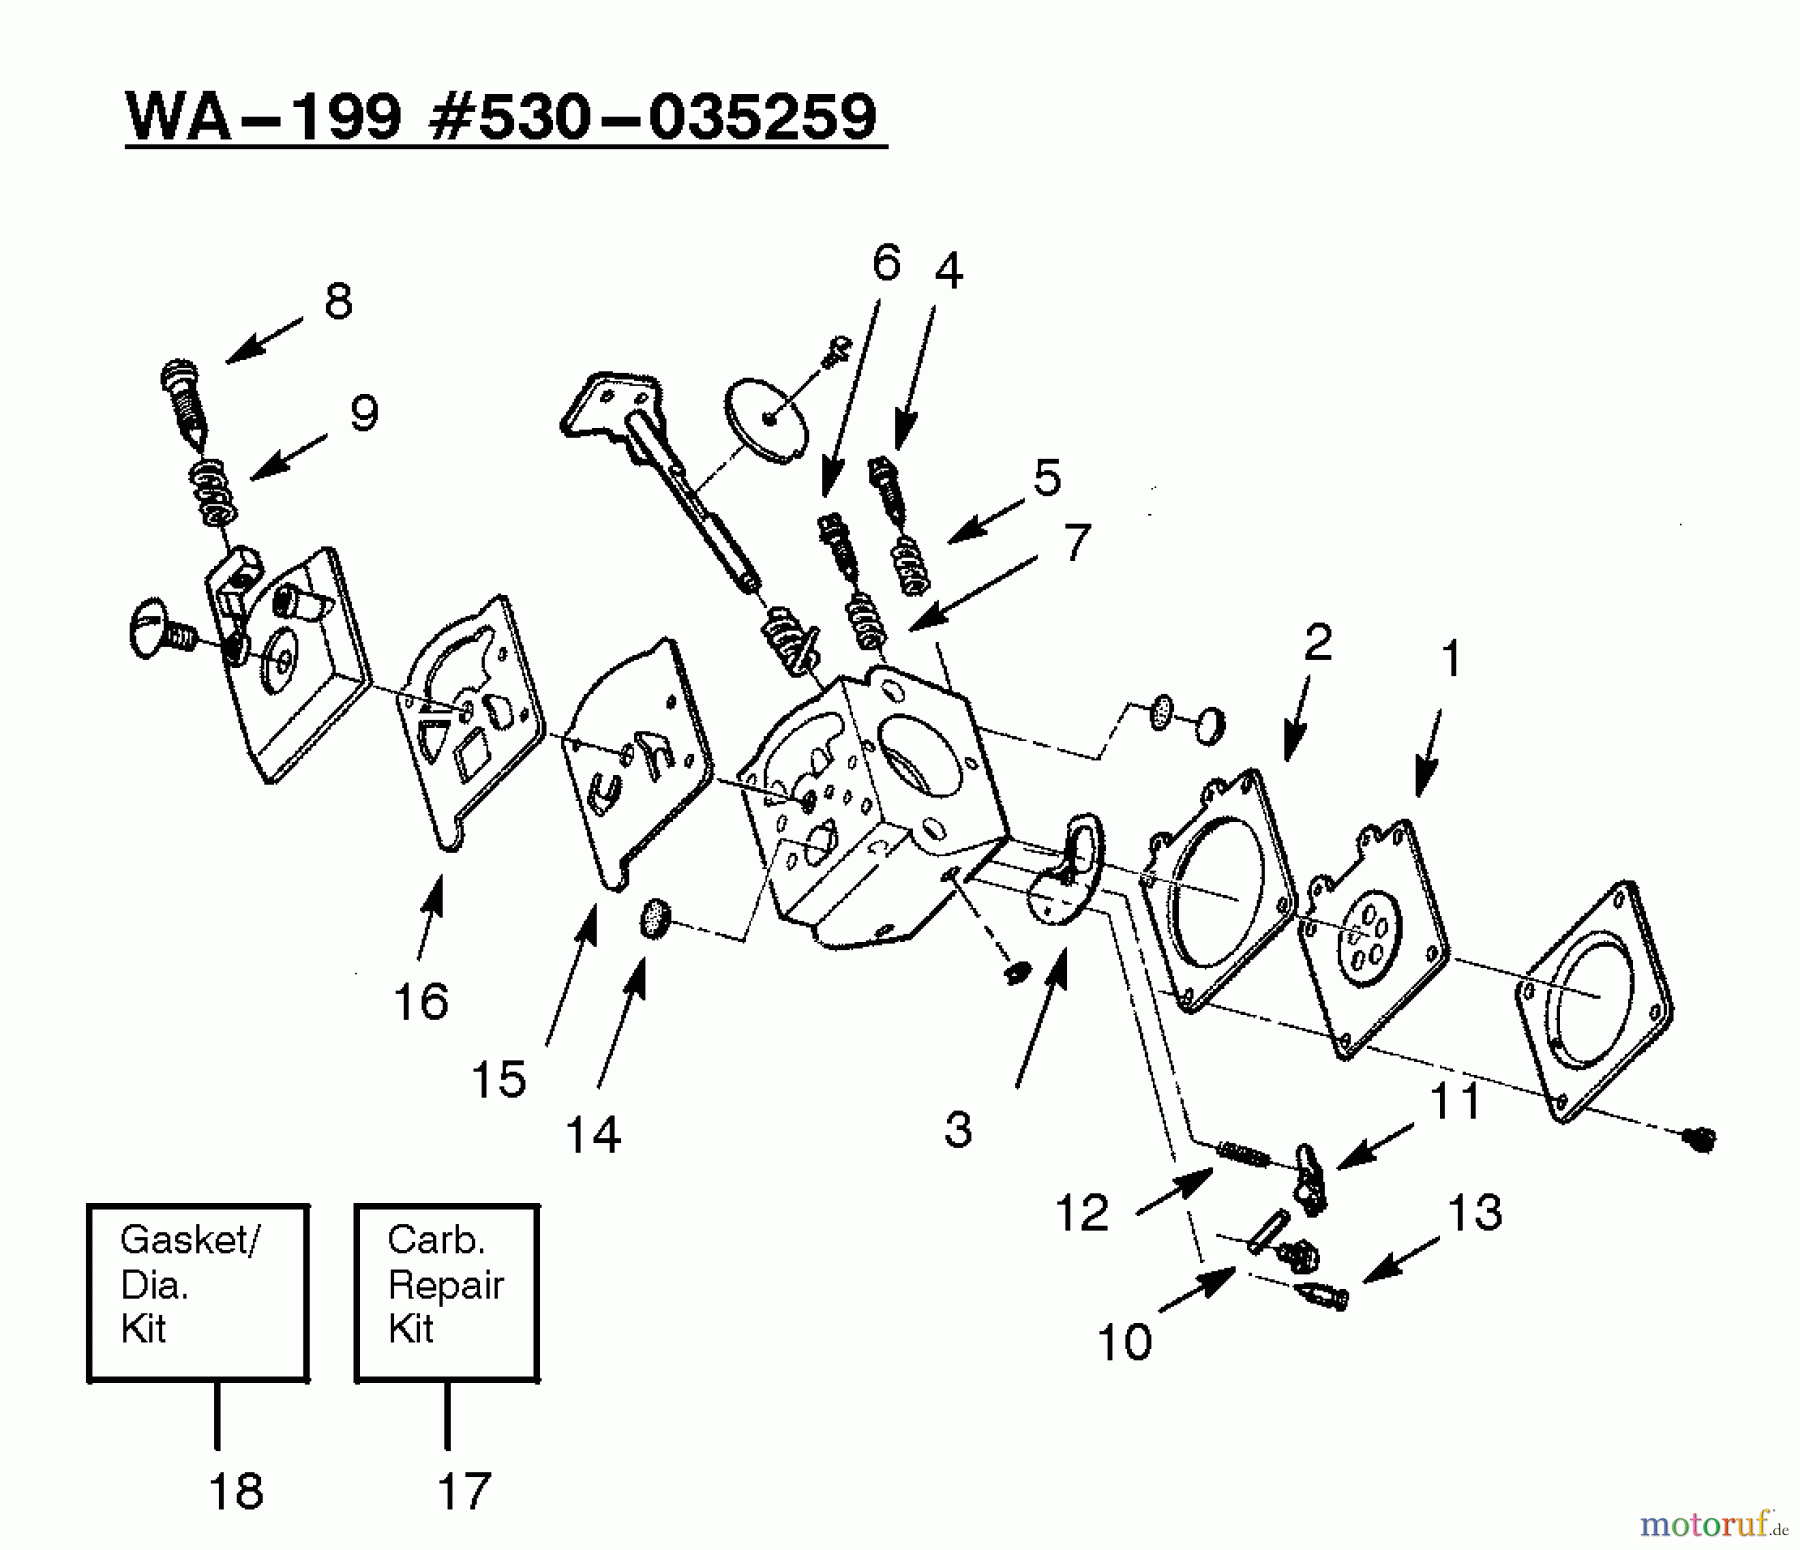  Poulan / Weed Eater Motorsensen, Trimmer XT40T - Weed Eater String Trimmer Carburetor Assembly WA-199